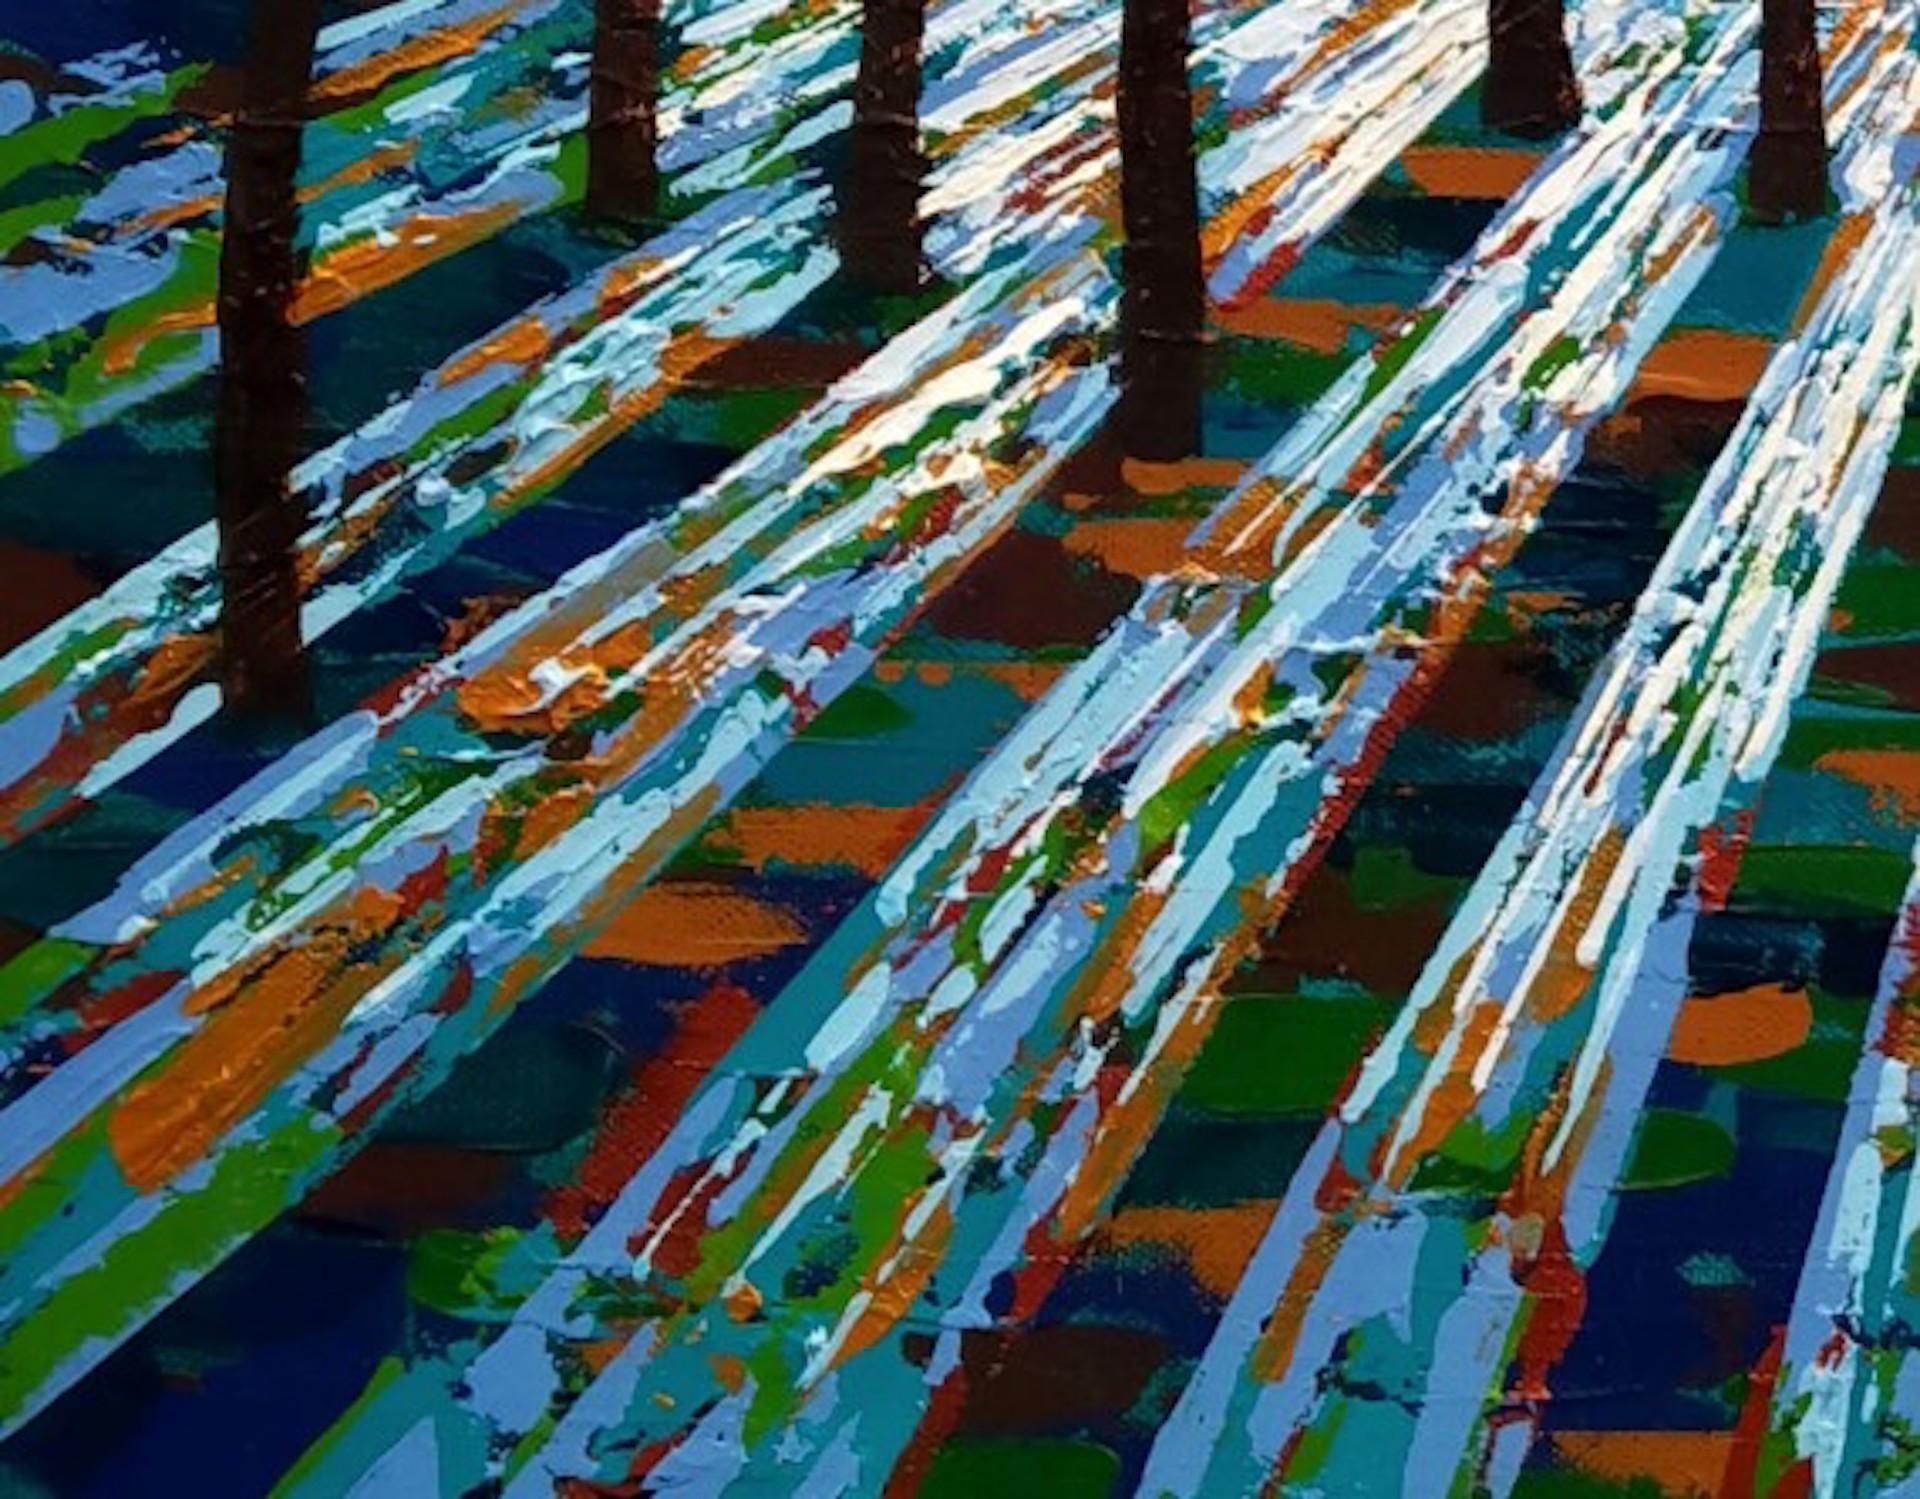 Woodland Daydream [2021]
Original
Landscape
Acrylics on canvas
Image size: H:60 cm x W:60 cm
Complete Size of Unframed Work: H:60 cm x W:60 cm x D:3.5cm
Sold Unframed

